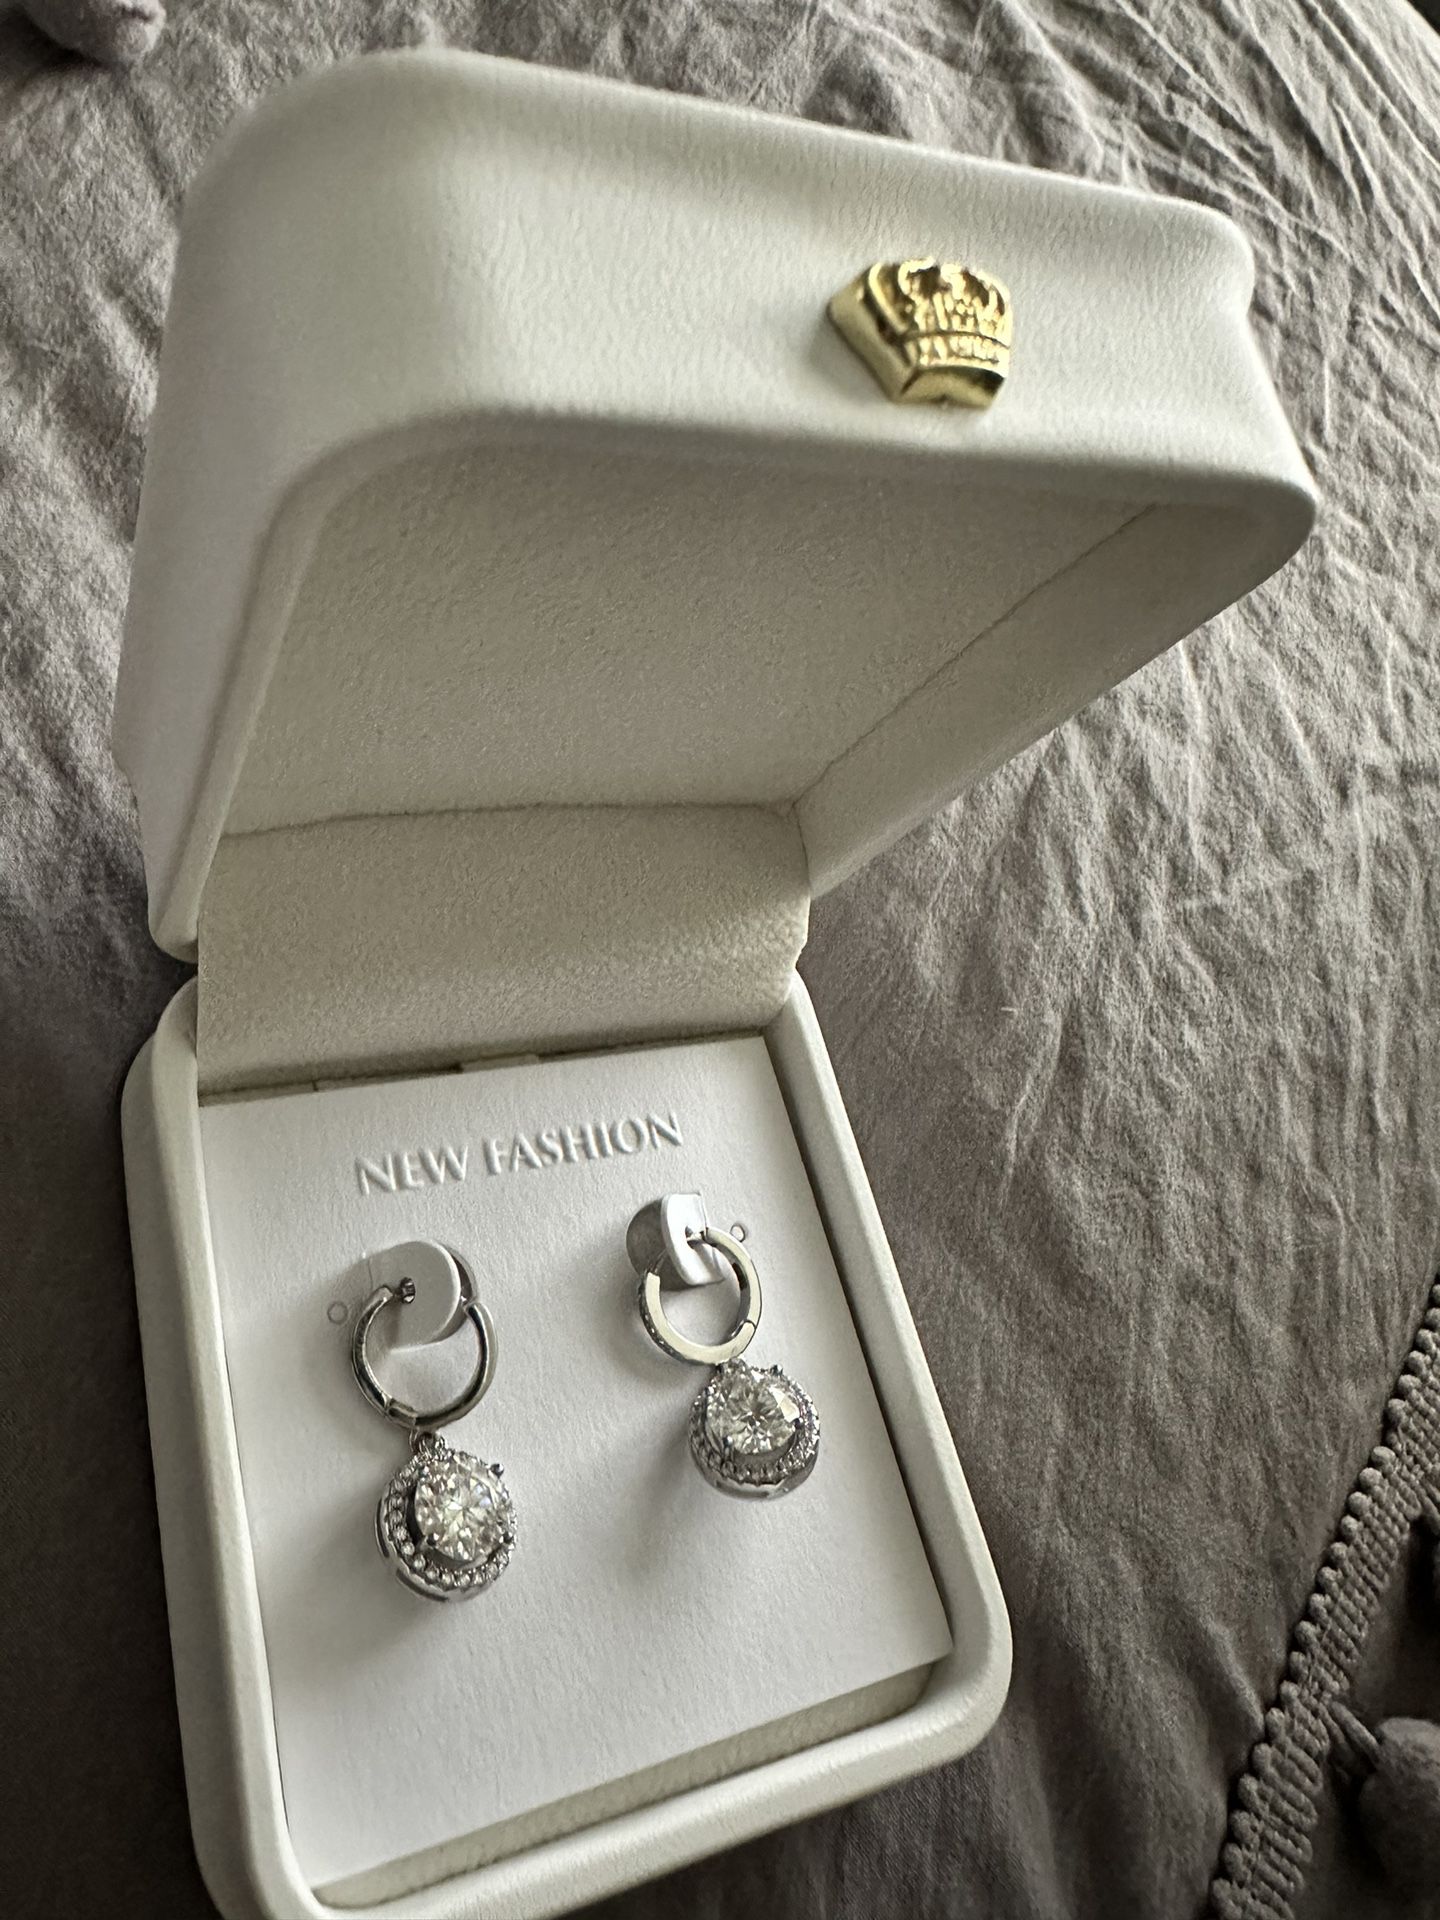 wowshow Moissanite Earrings 925 Sterling Silver Dangle Earrings 4ct Moissanite Drop Earrings White Gold Plated Dangle Hoop Diamond Earrings for Women